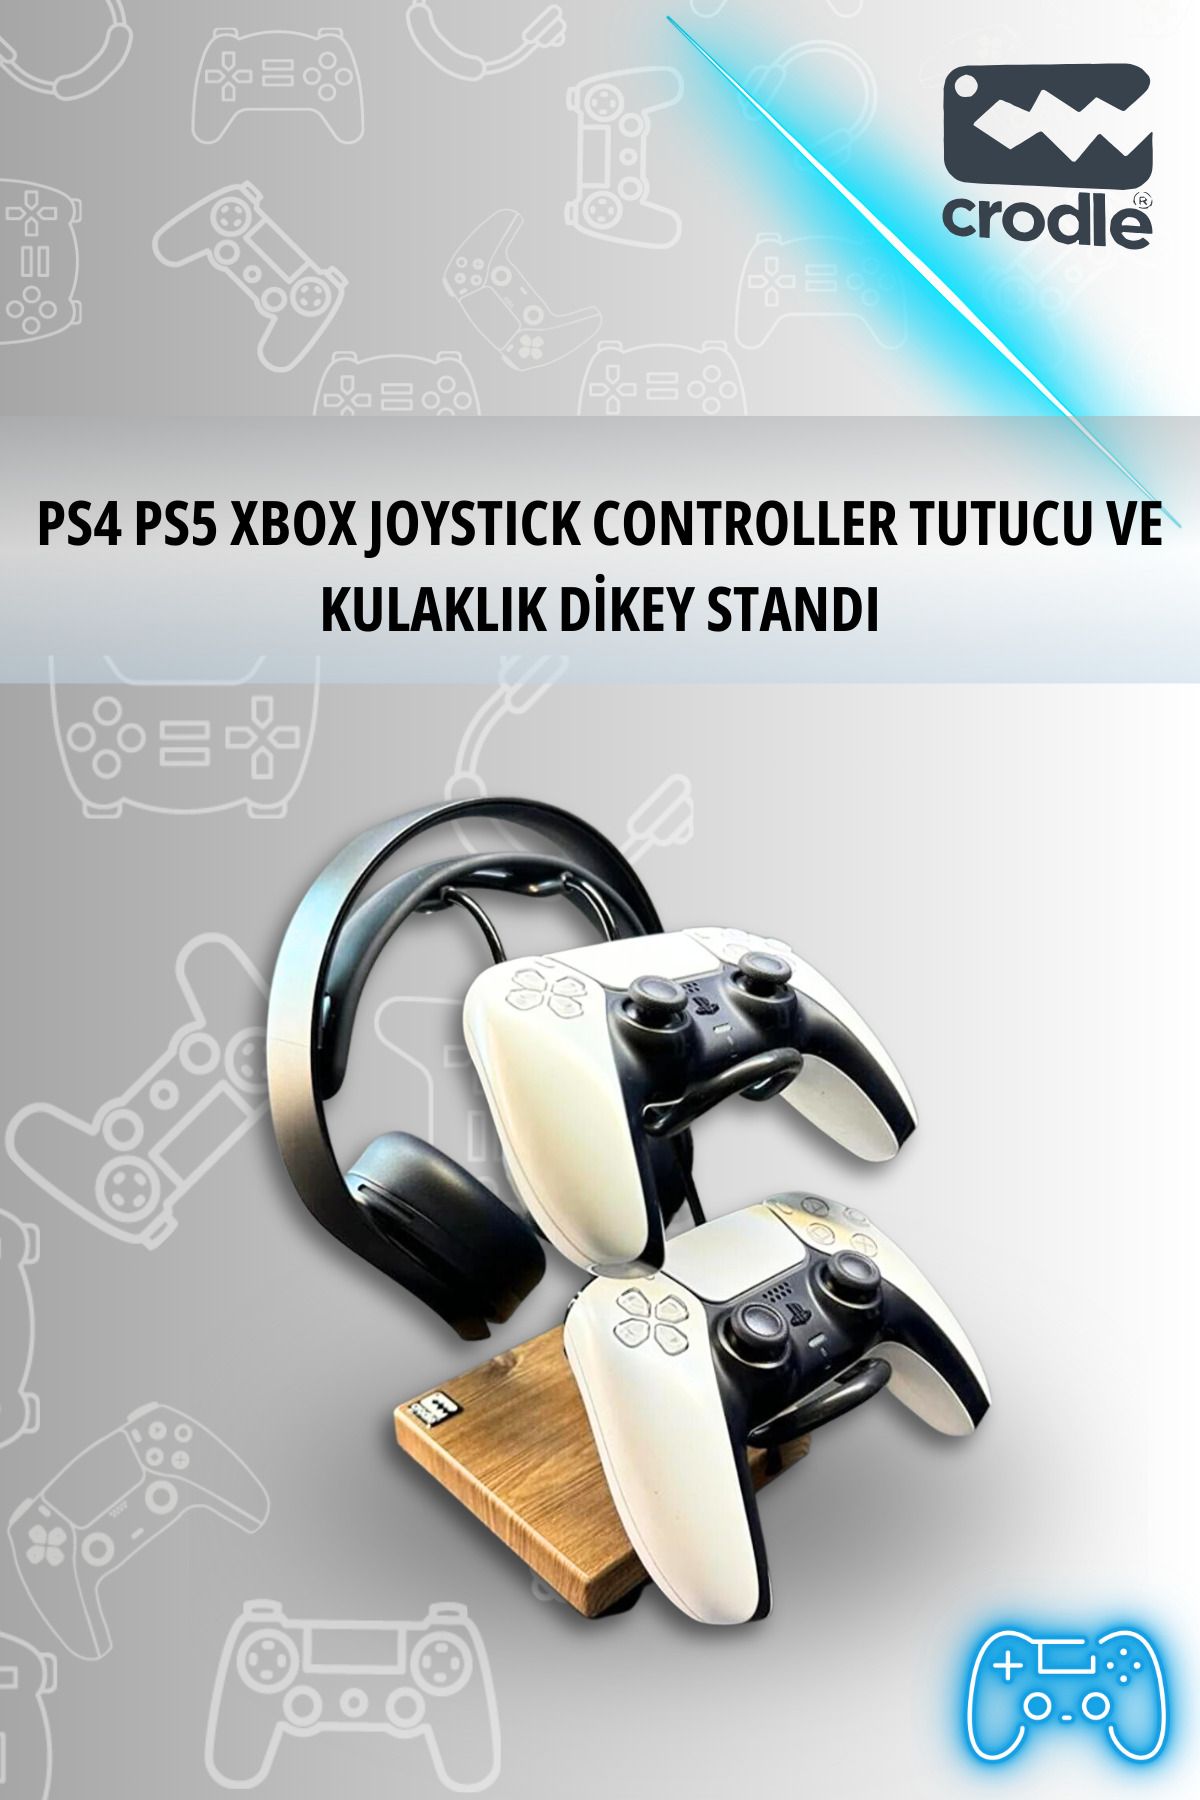 Crodle Ceviz Ahşap Ve Siyah Metal Gaming Ps4 Ps5 Xbox Joystick Kontroller Tutucu Ve Kulaklık Dikey Standı